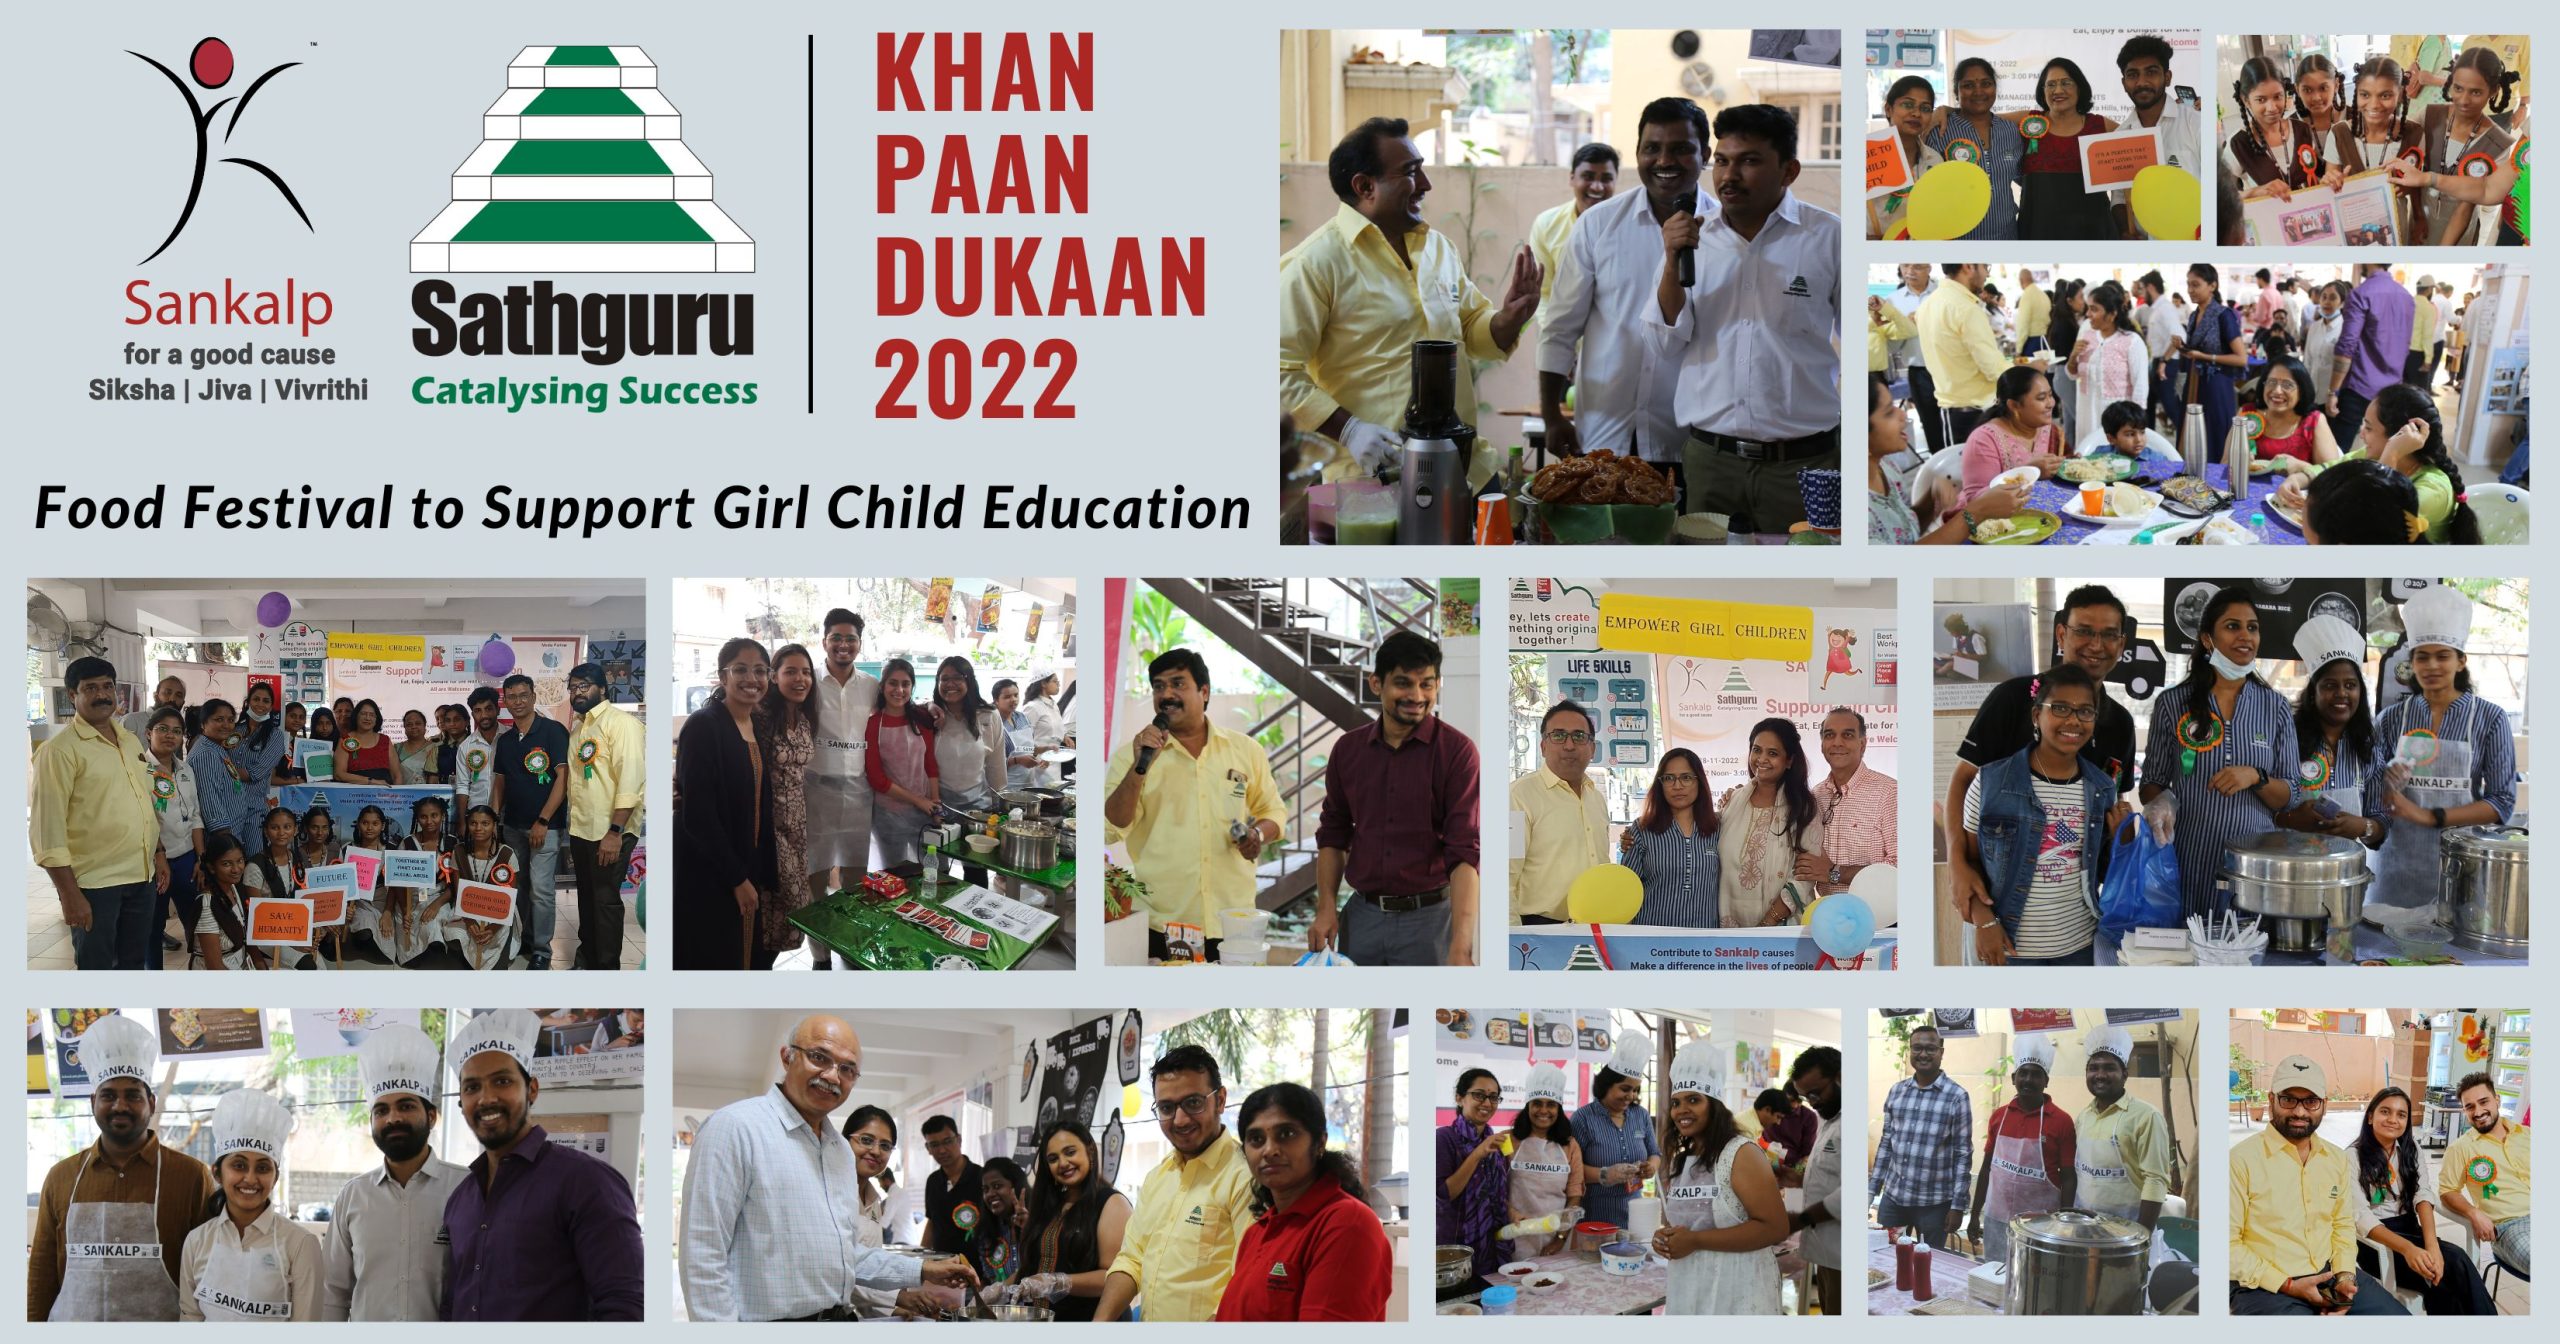 Sankalp Siksha - Khan Paan Dukaan 2022 Food festival to support girl child education